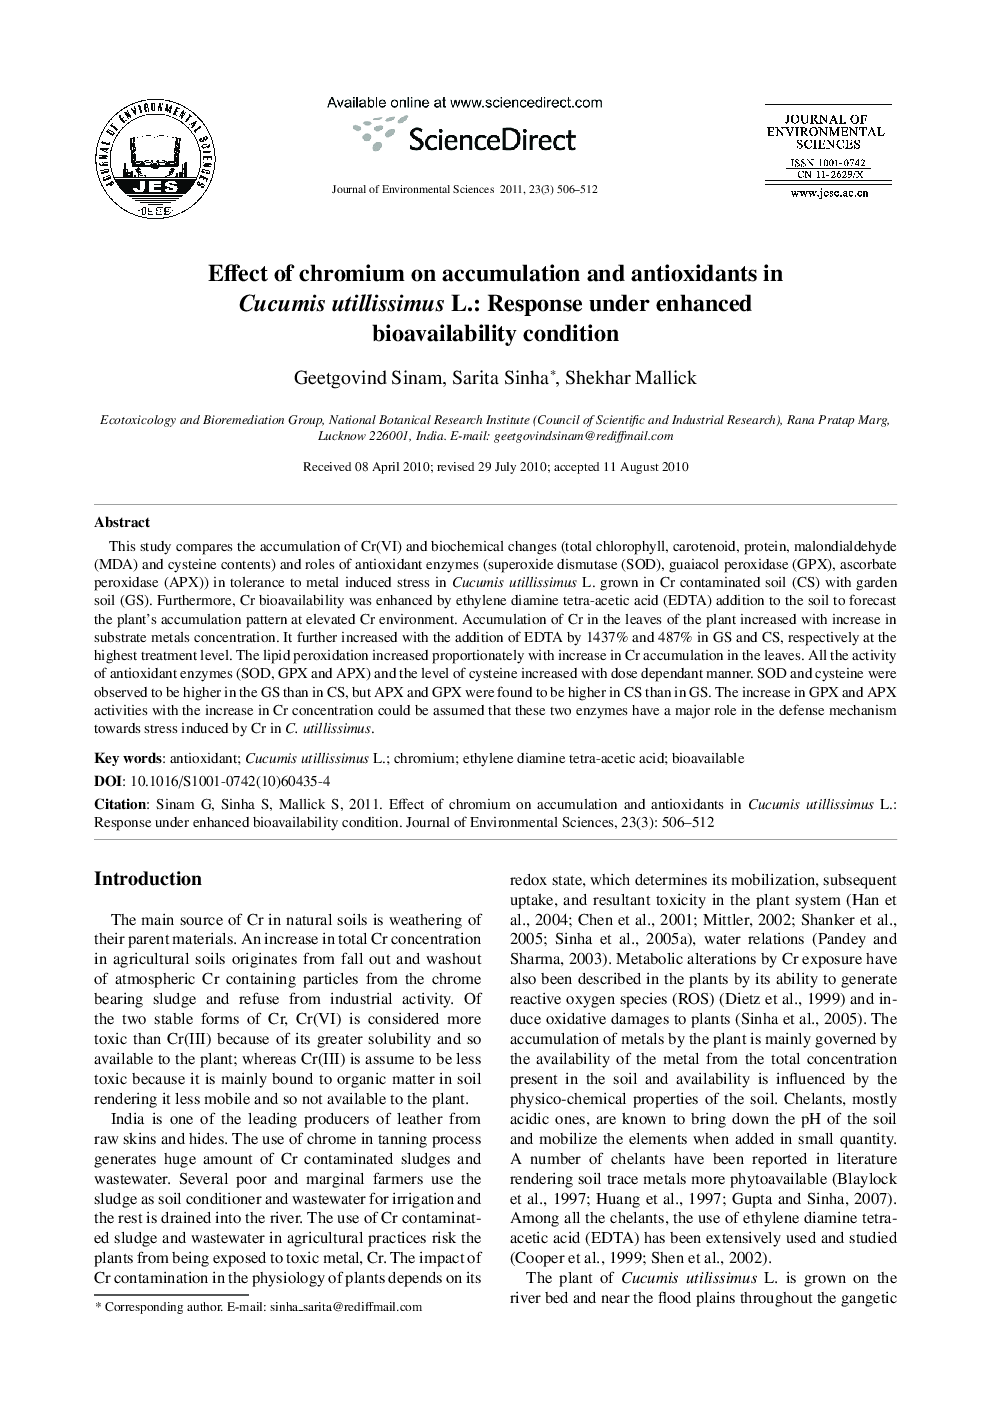 Effect of chromium on accumulation and antioxidants in Cucumis utillissimus L.: Response under enhanced bioavailability condition